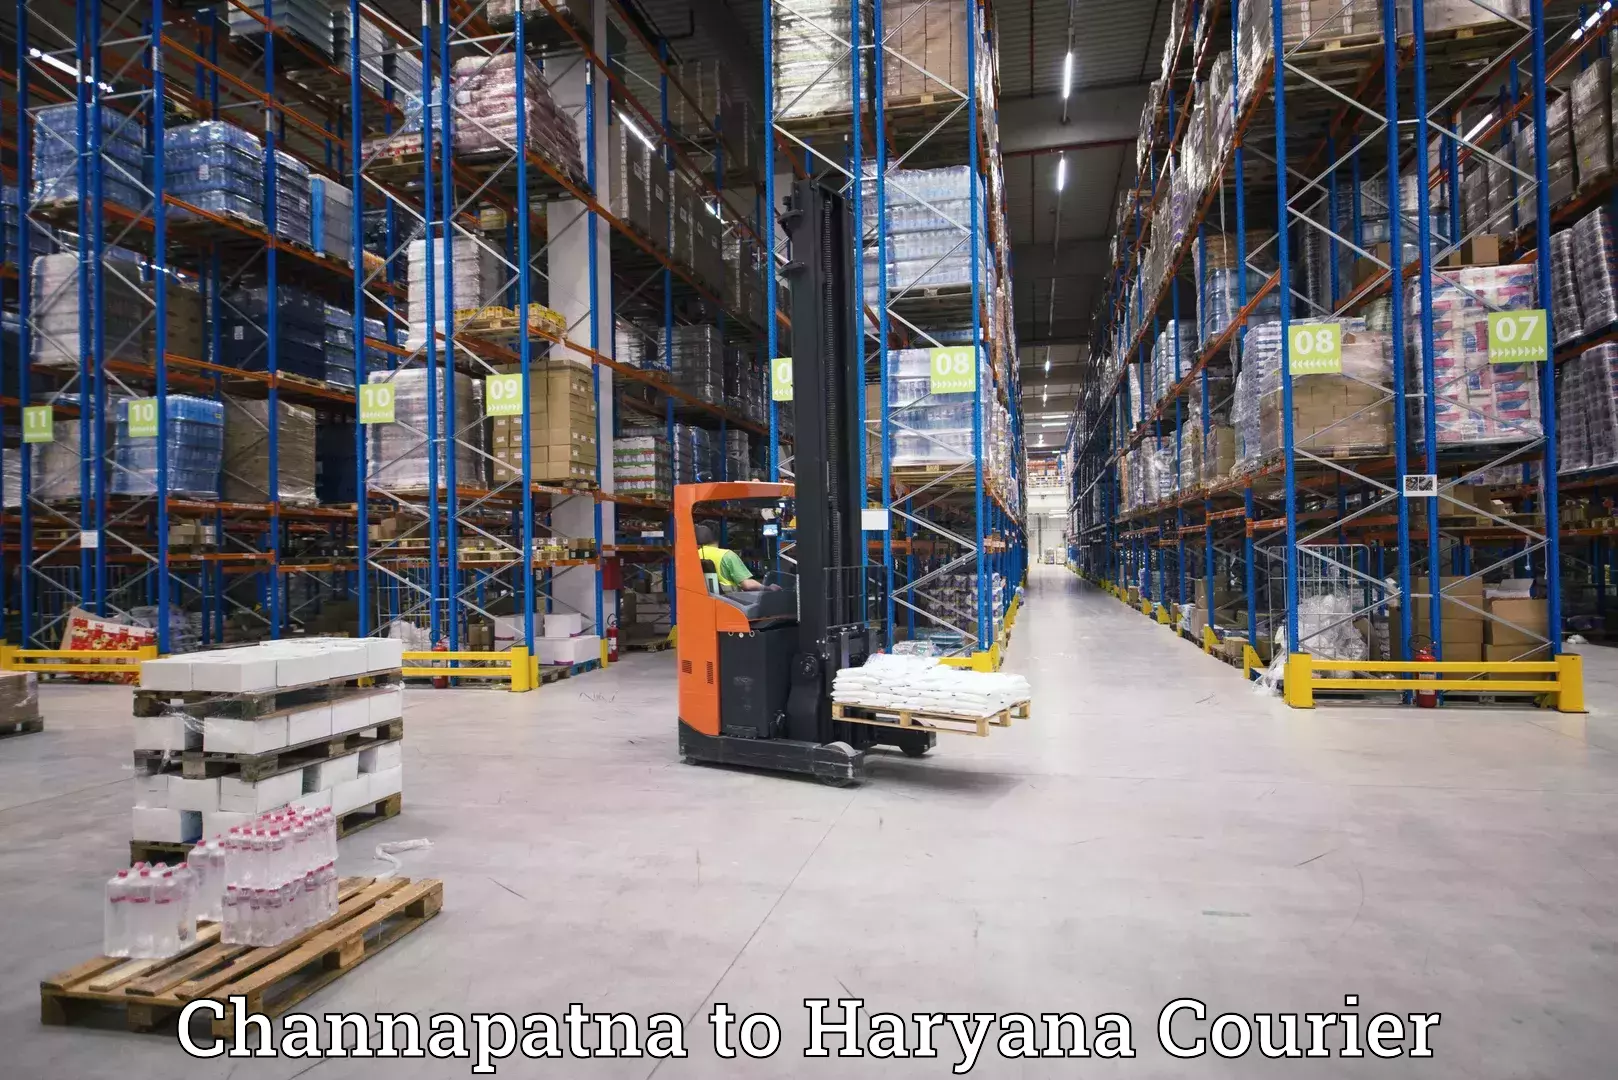 Global logistics network Channapatna to Chirya